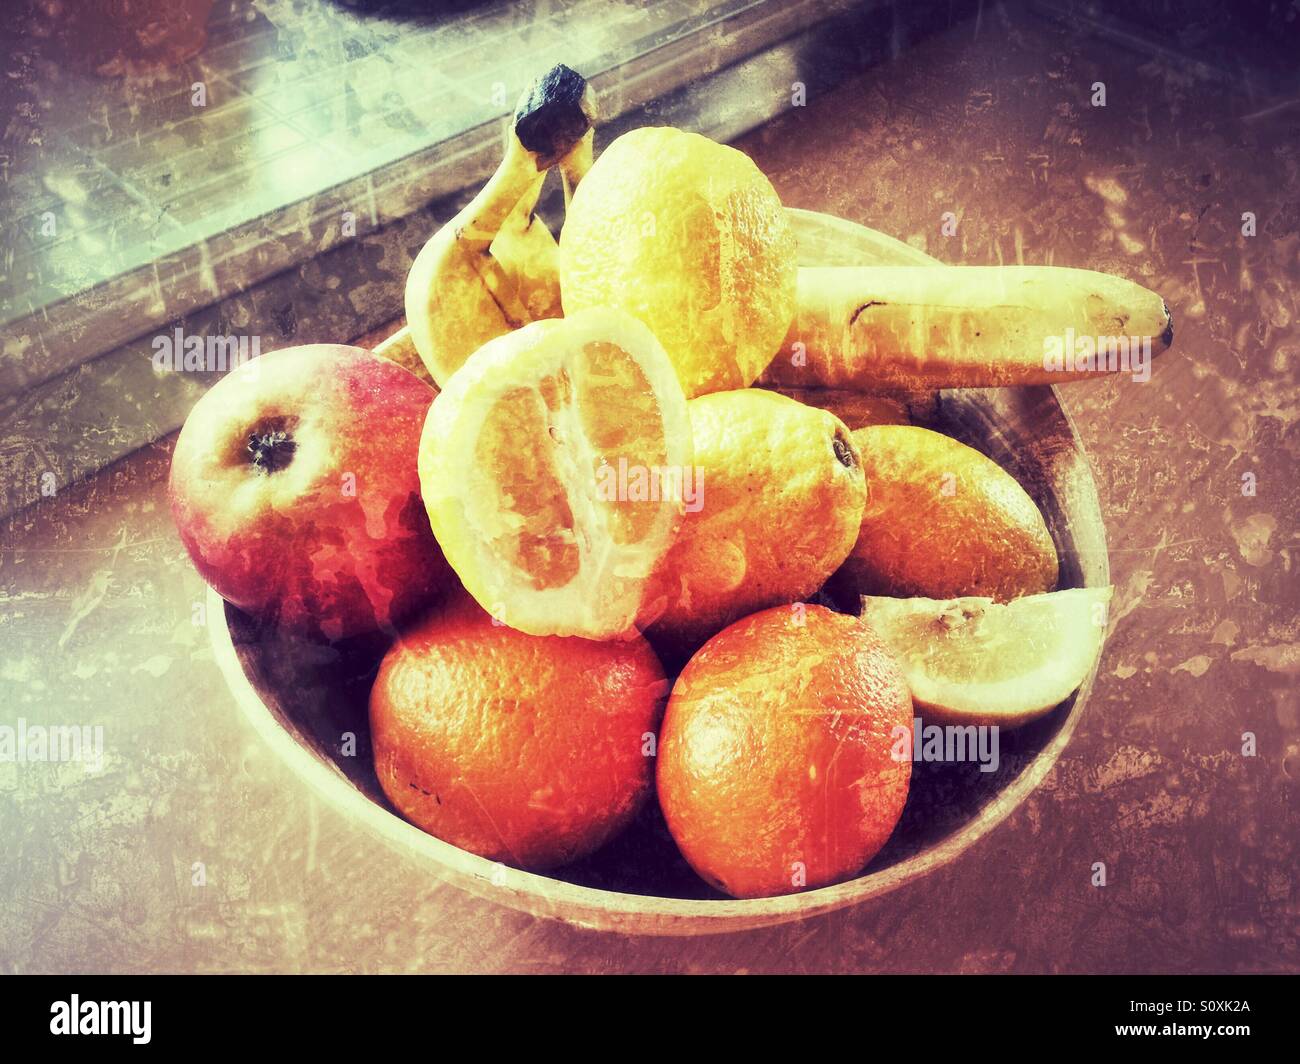 Cesta de fruta fotografías e imágenes de alta resolución - Alamy